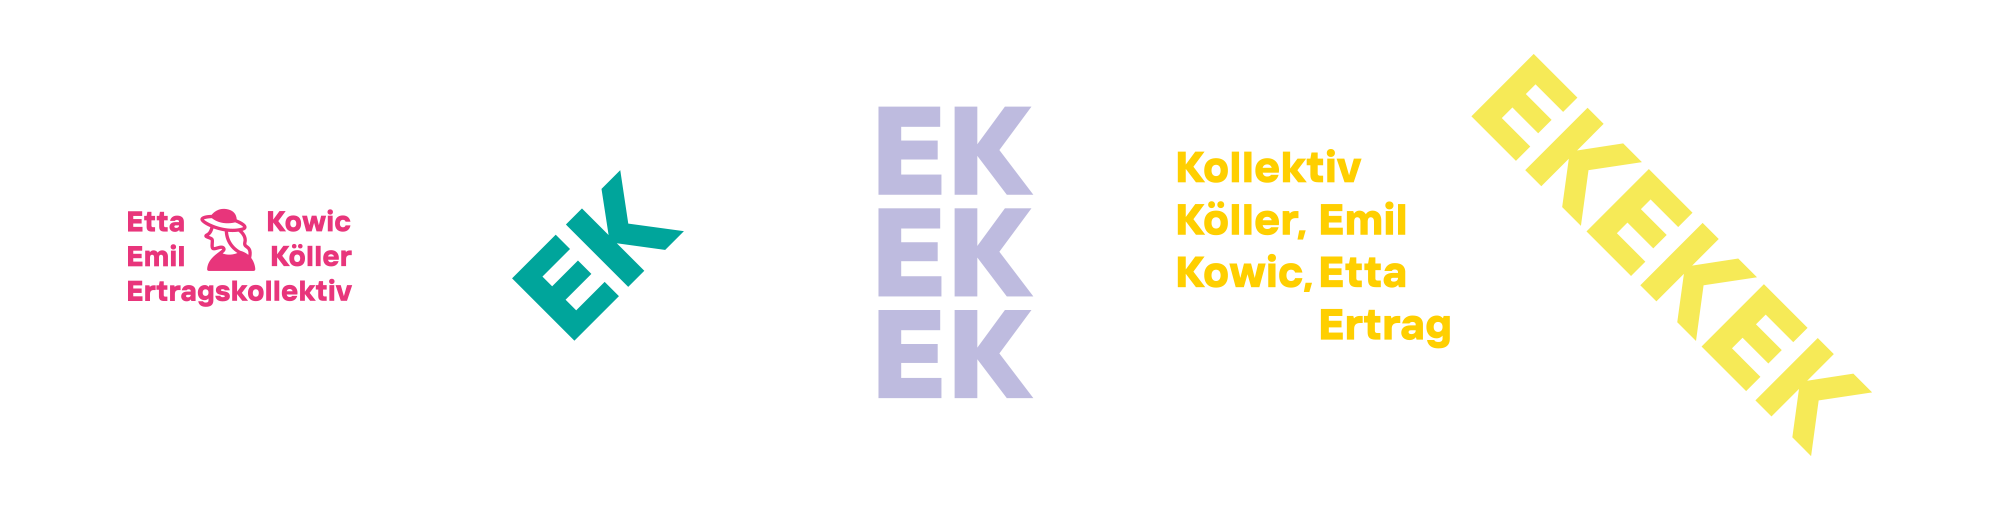 EKEKEK Visual Identity designed by Tobias Heumann